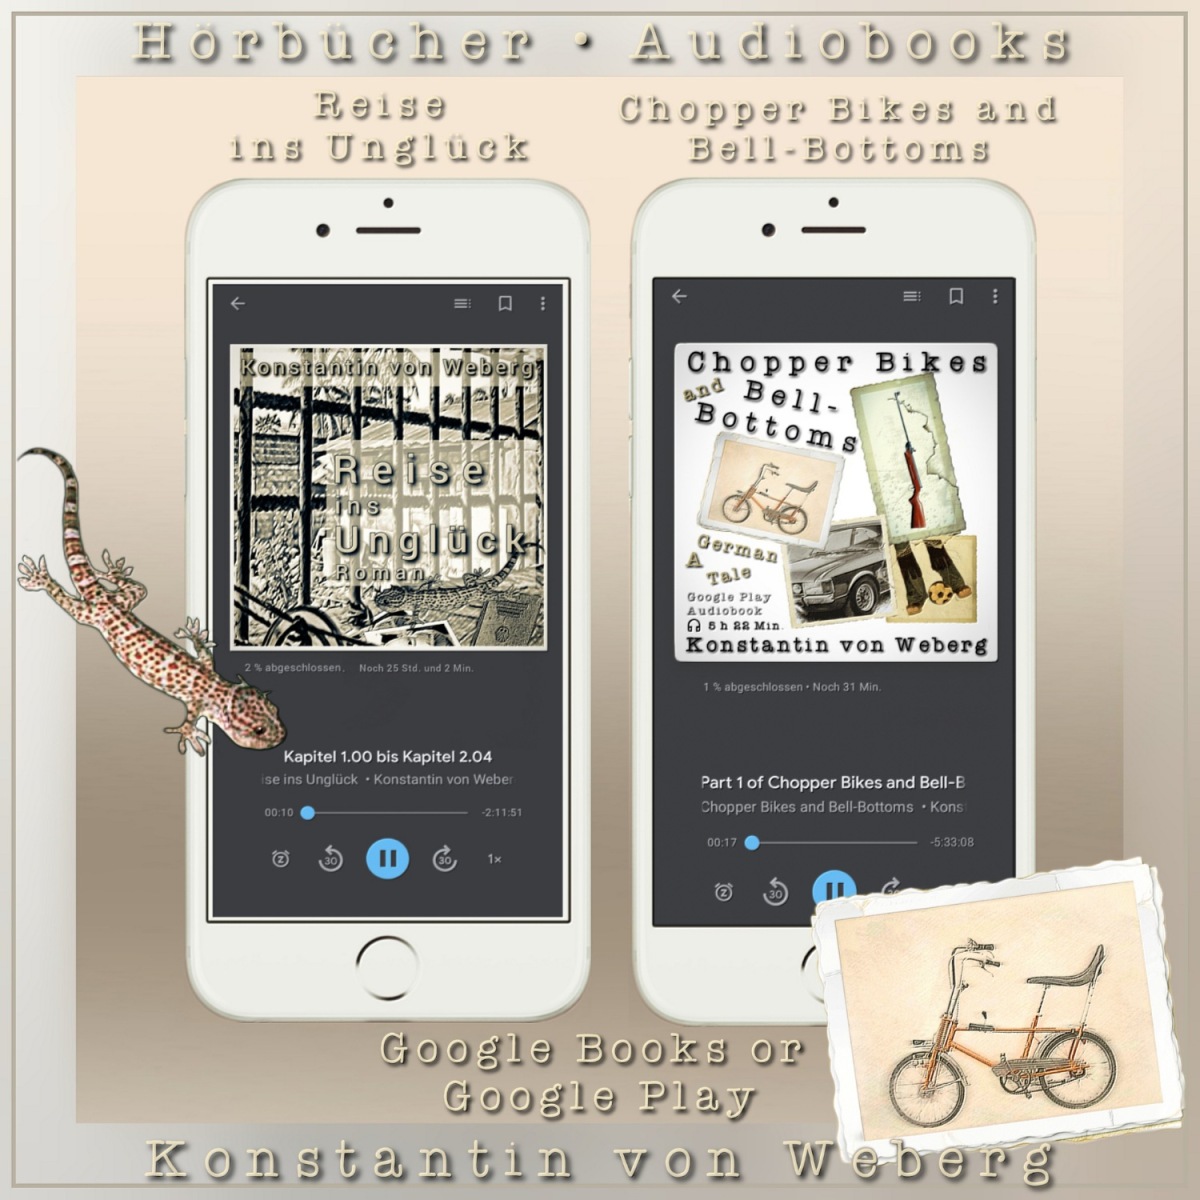 Audiobook on Google Books • Hörbücher bei Google Books